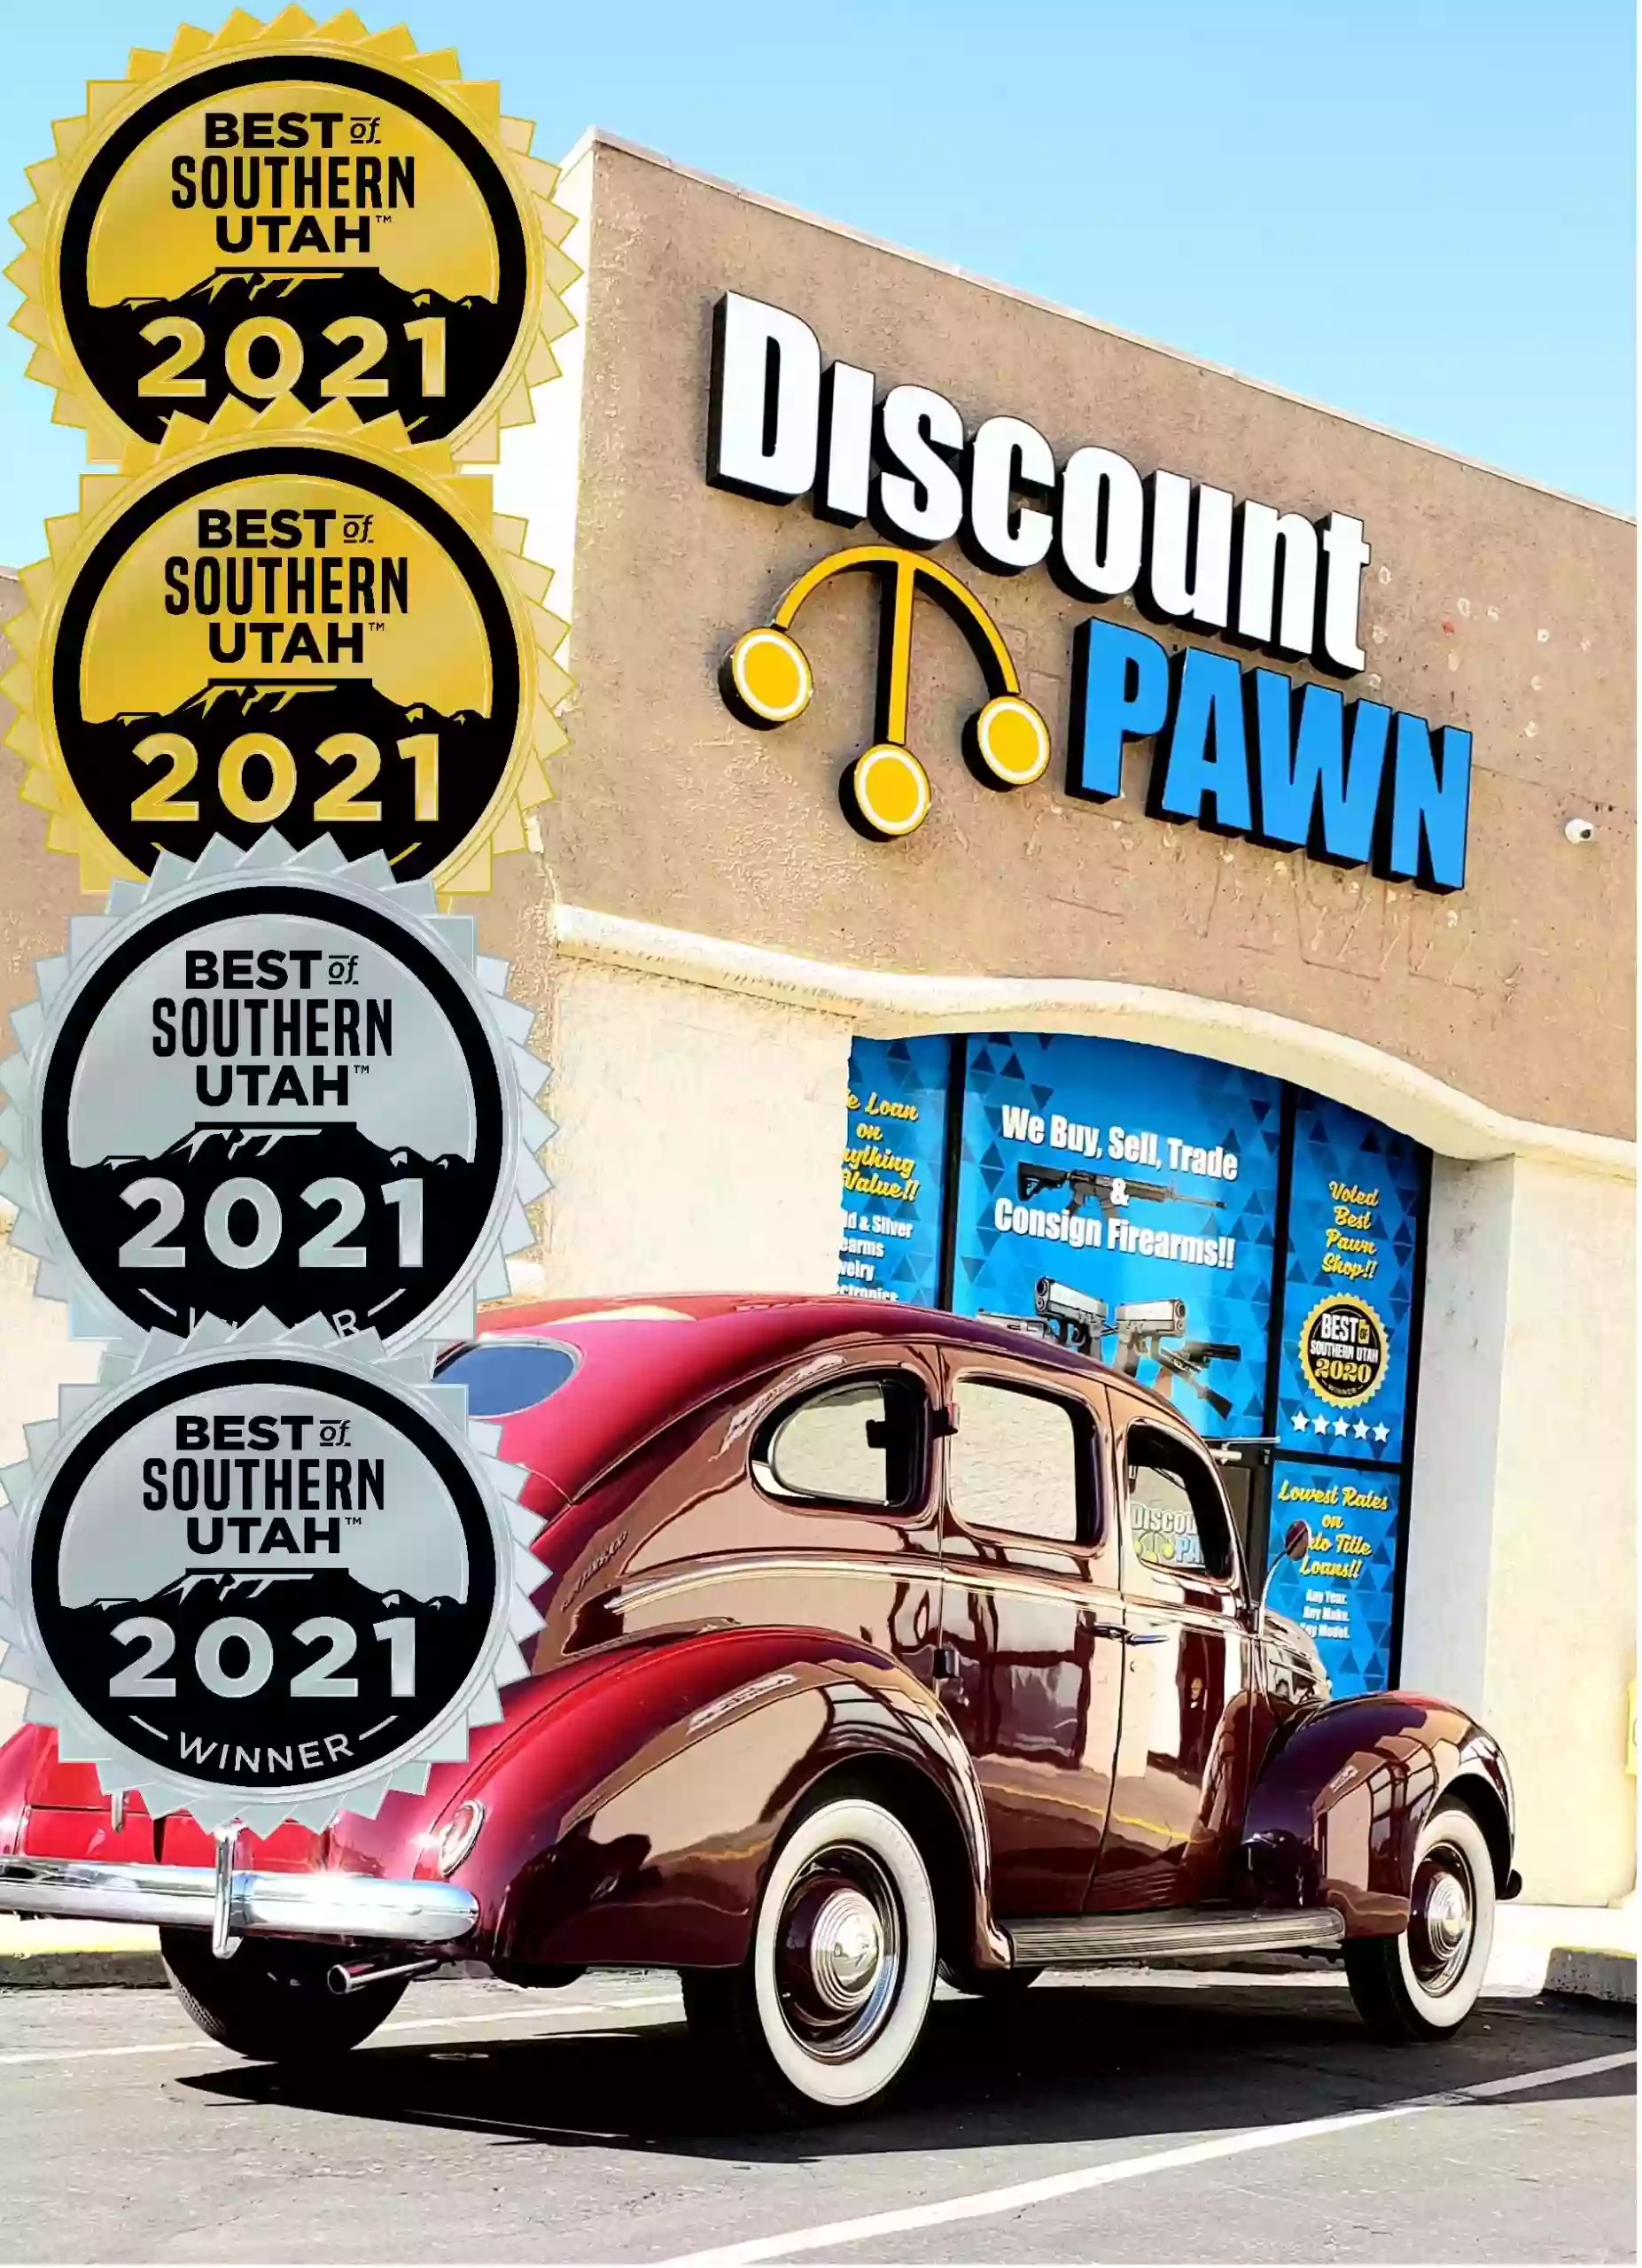 Discount Pawn Shop